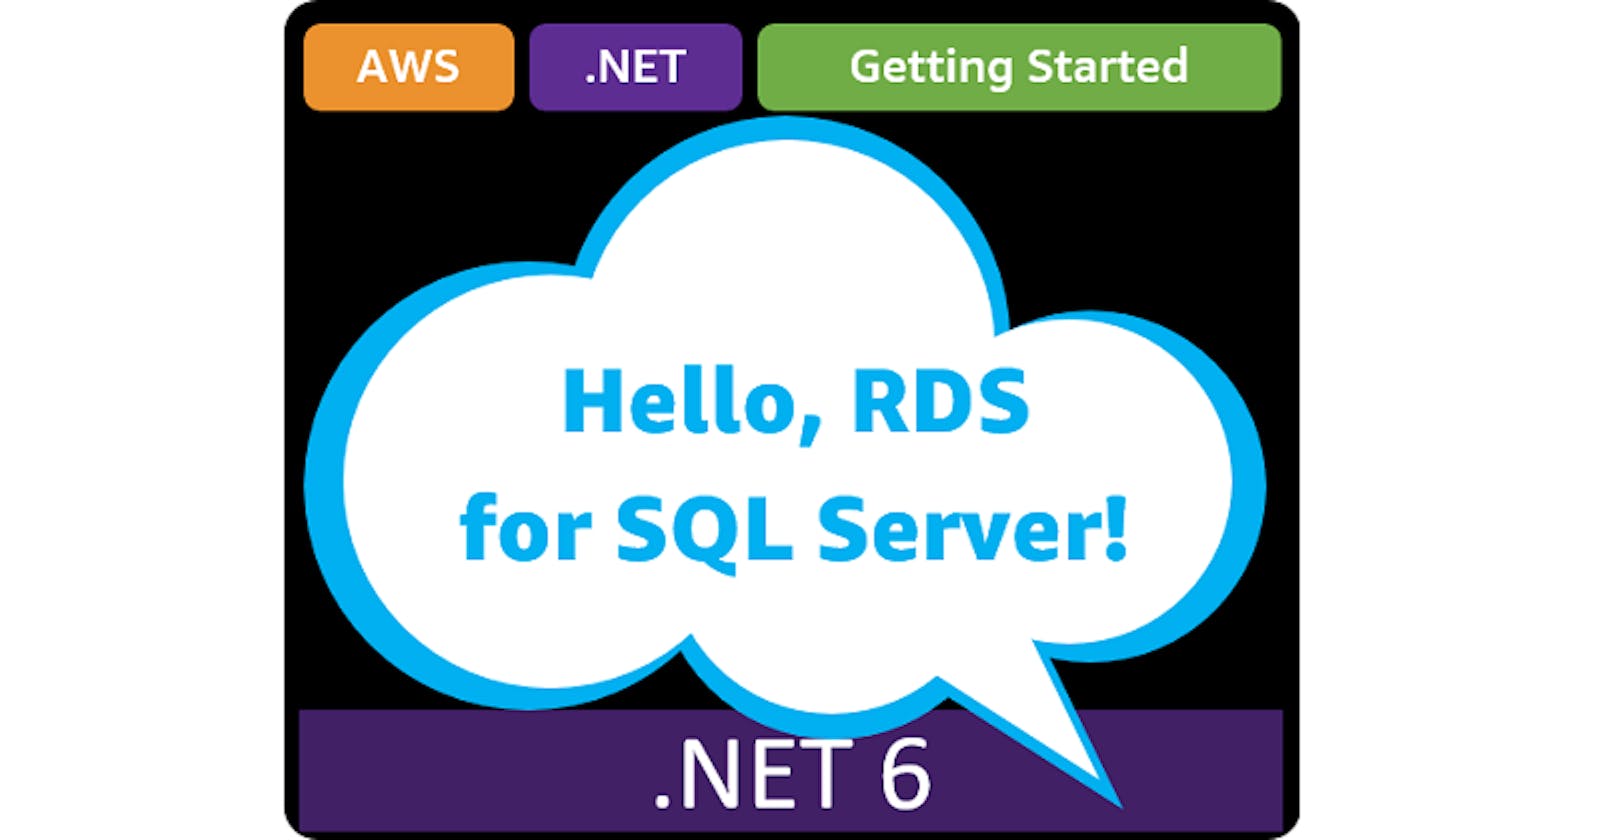 Hello, RDS for SQL Server!